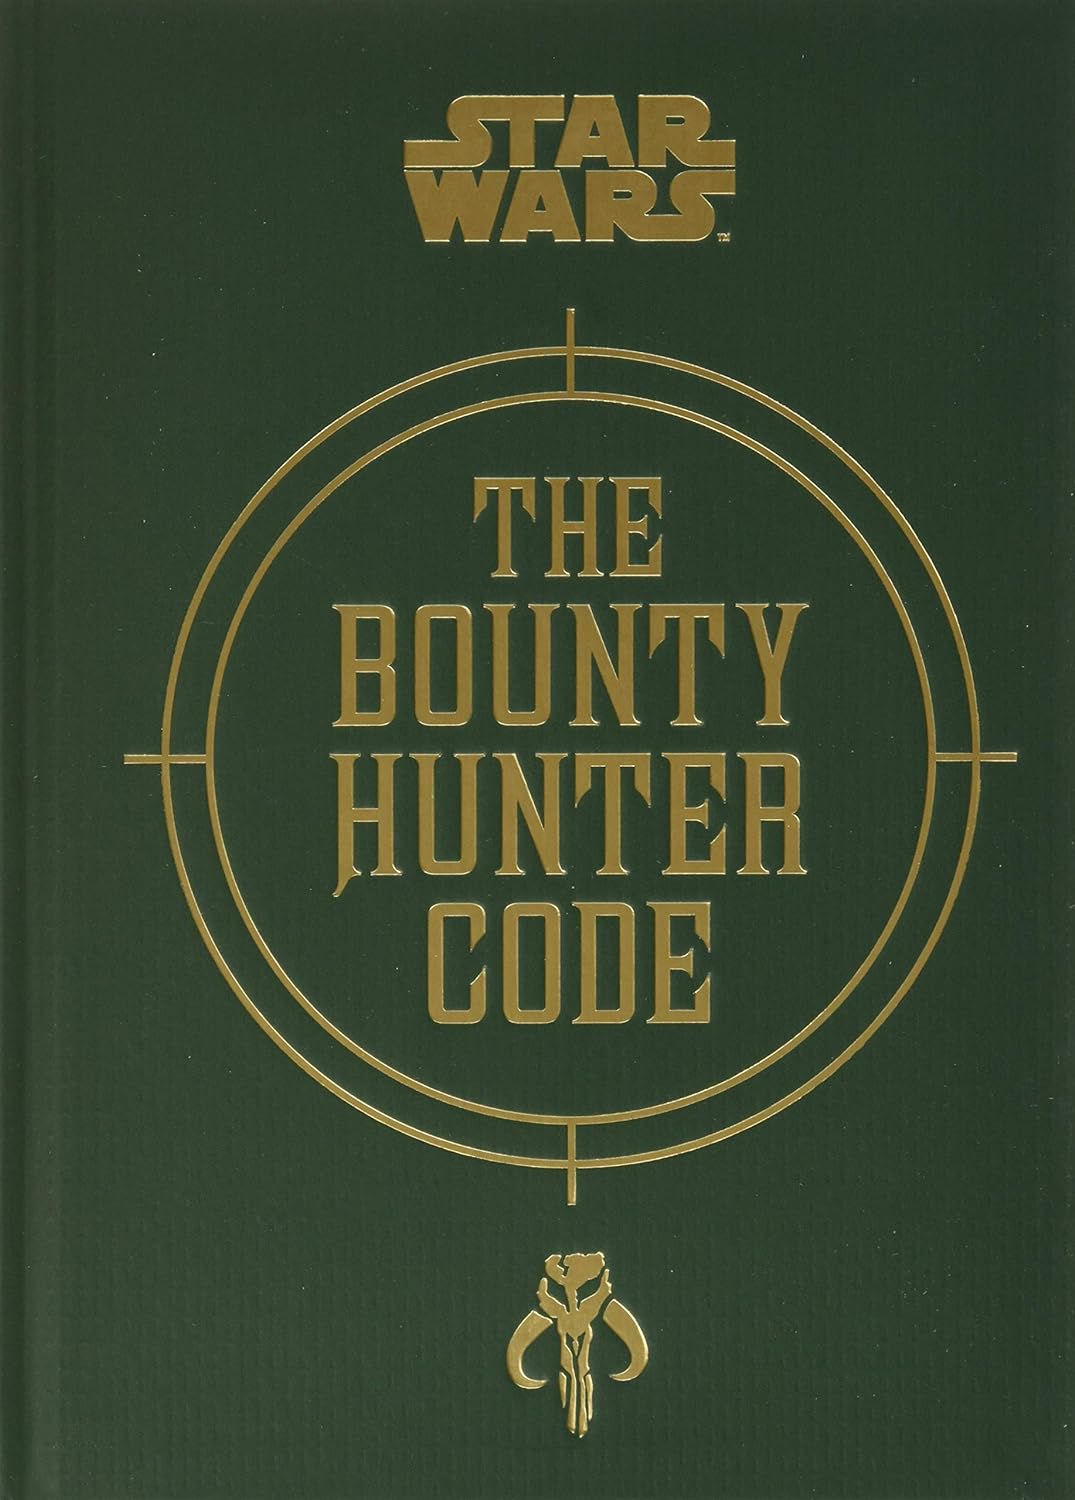 The Bounty Hunter Code by Daniel Wallace